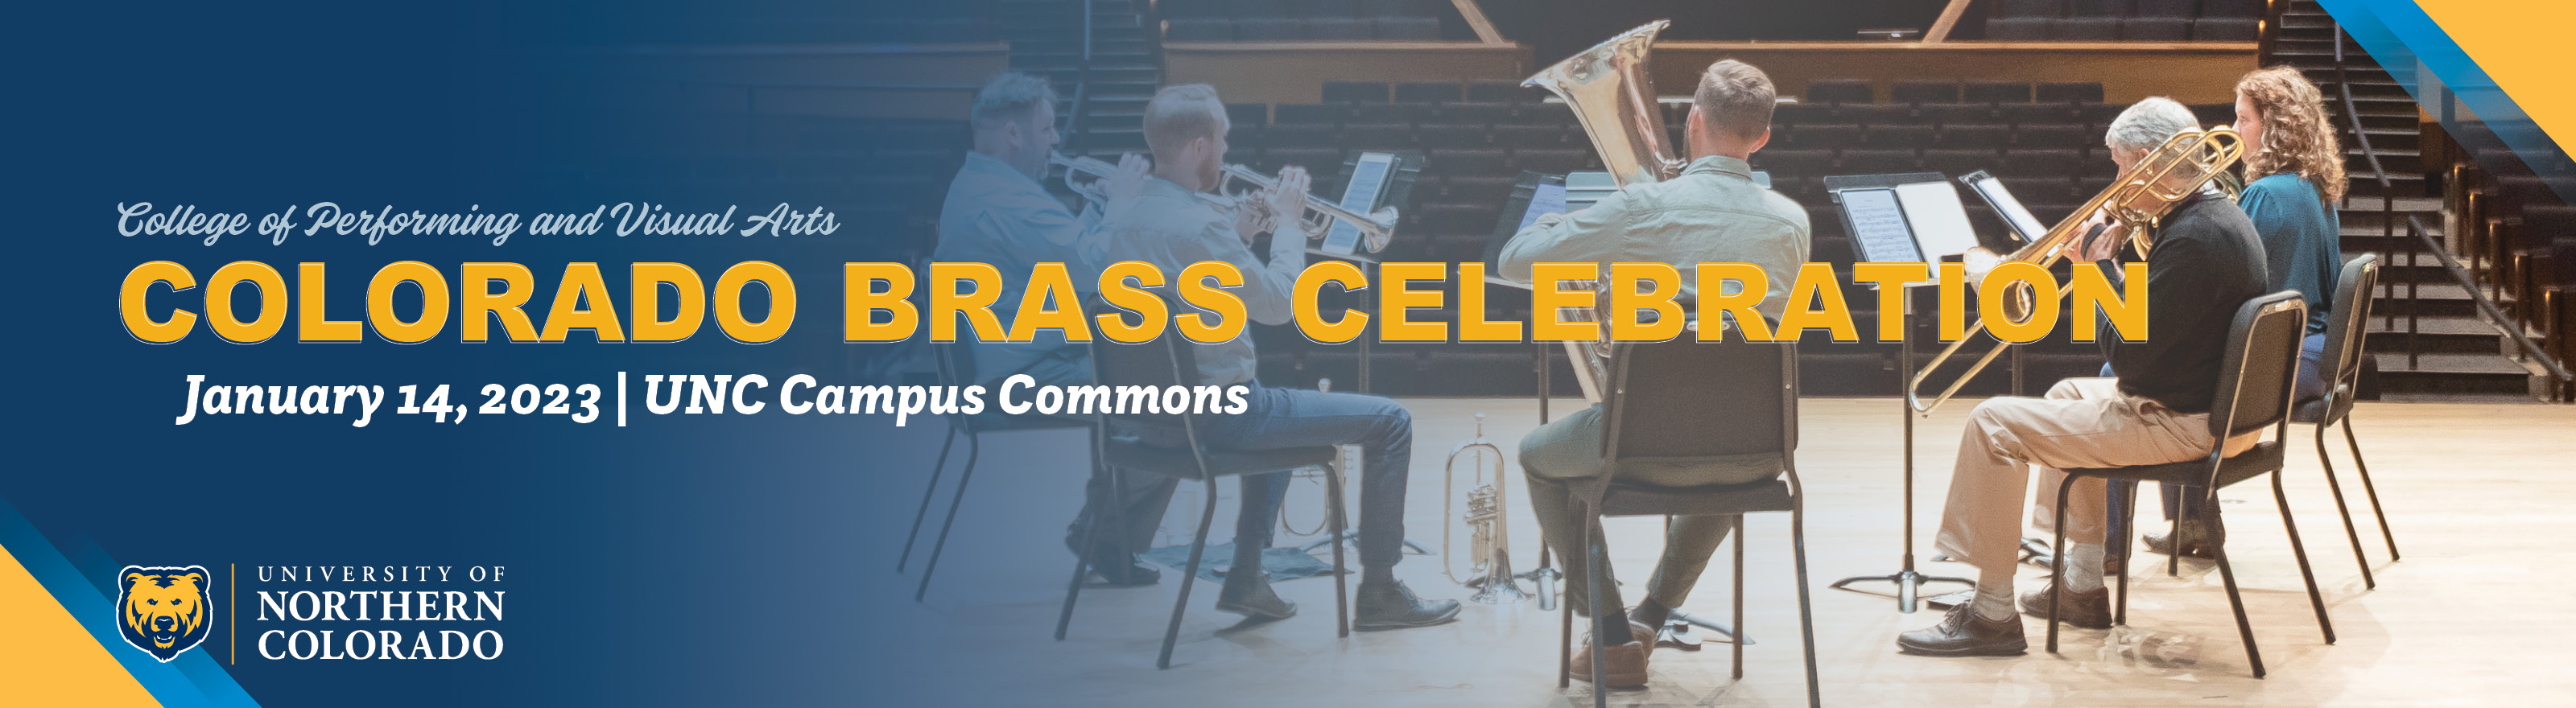 Colorado Brass Celebration